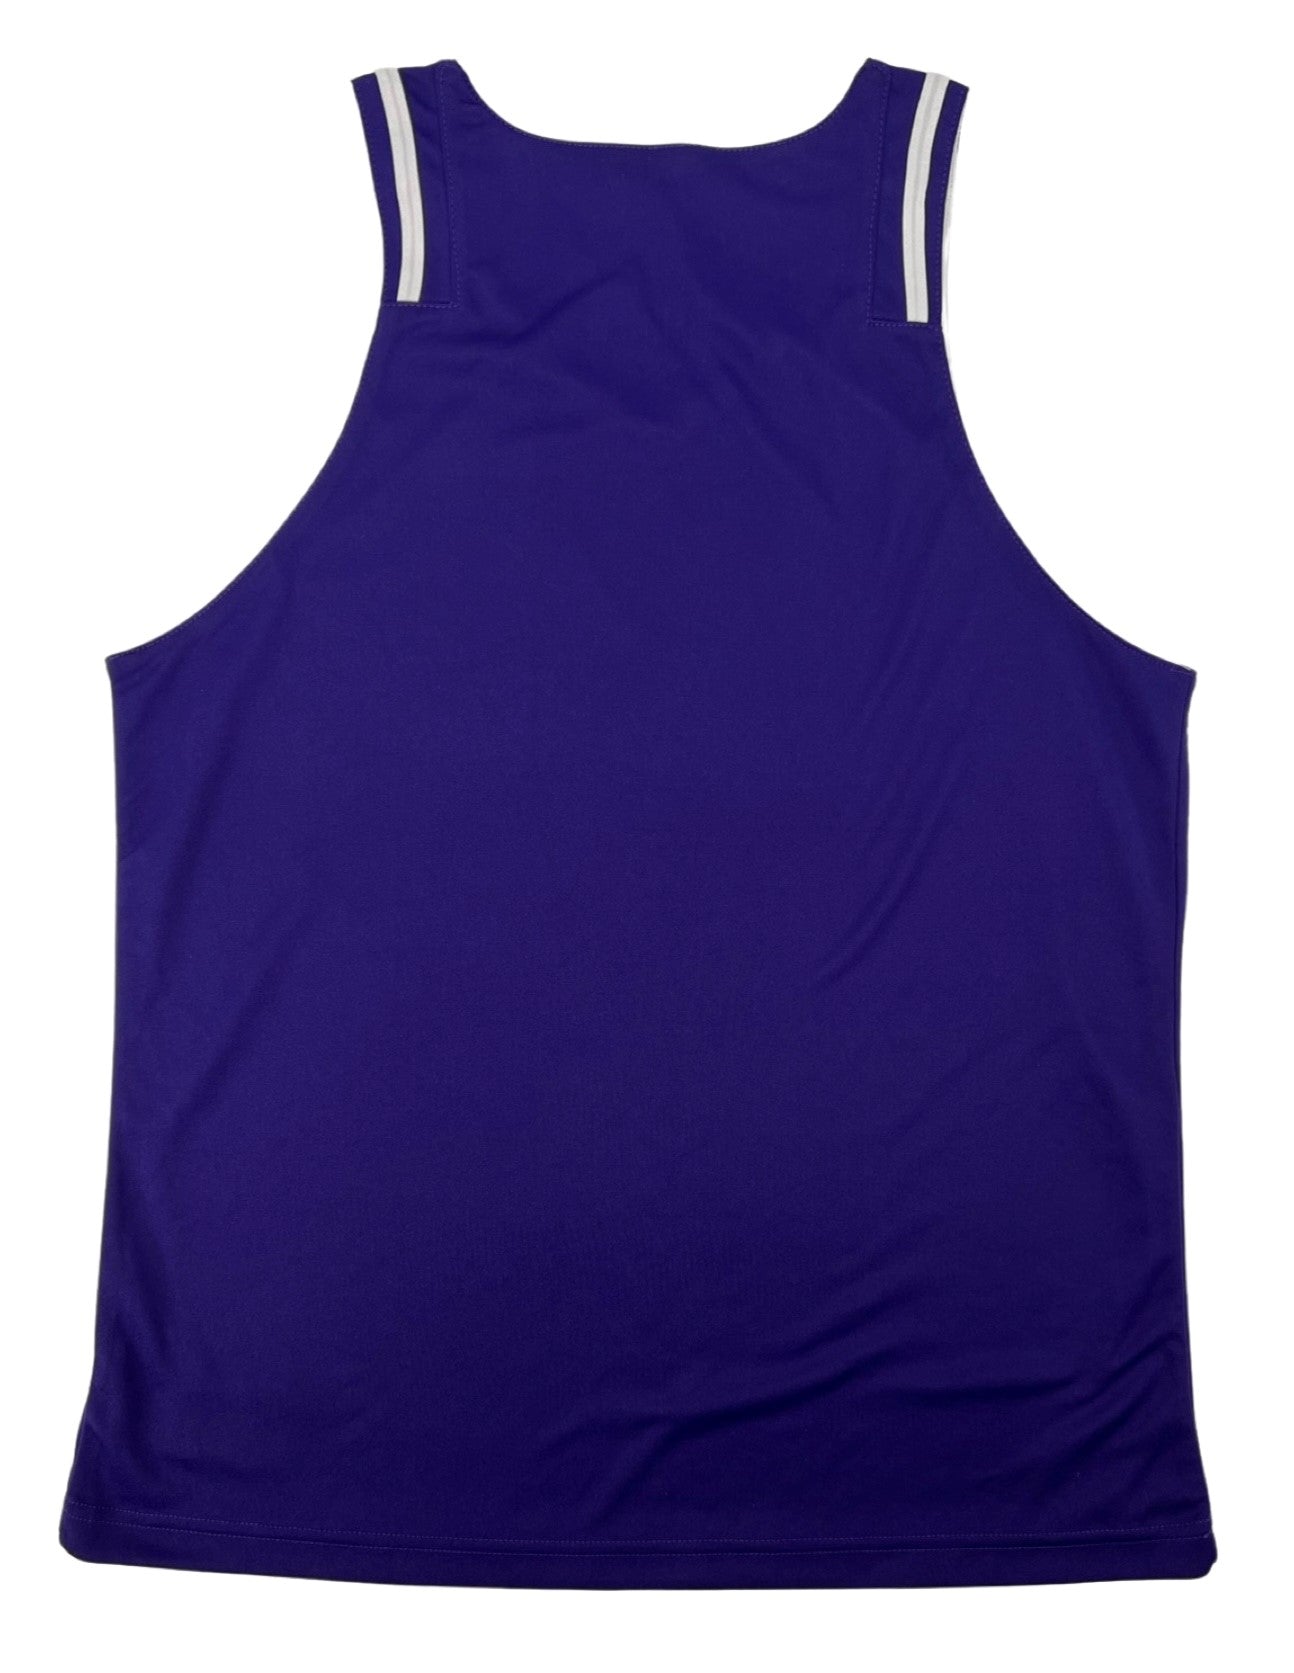 Shirts & Skins Purple/White All-Star Reversible Basketball Jersey